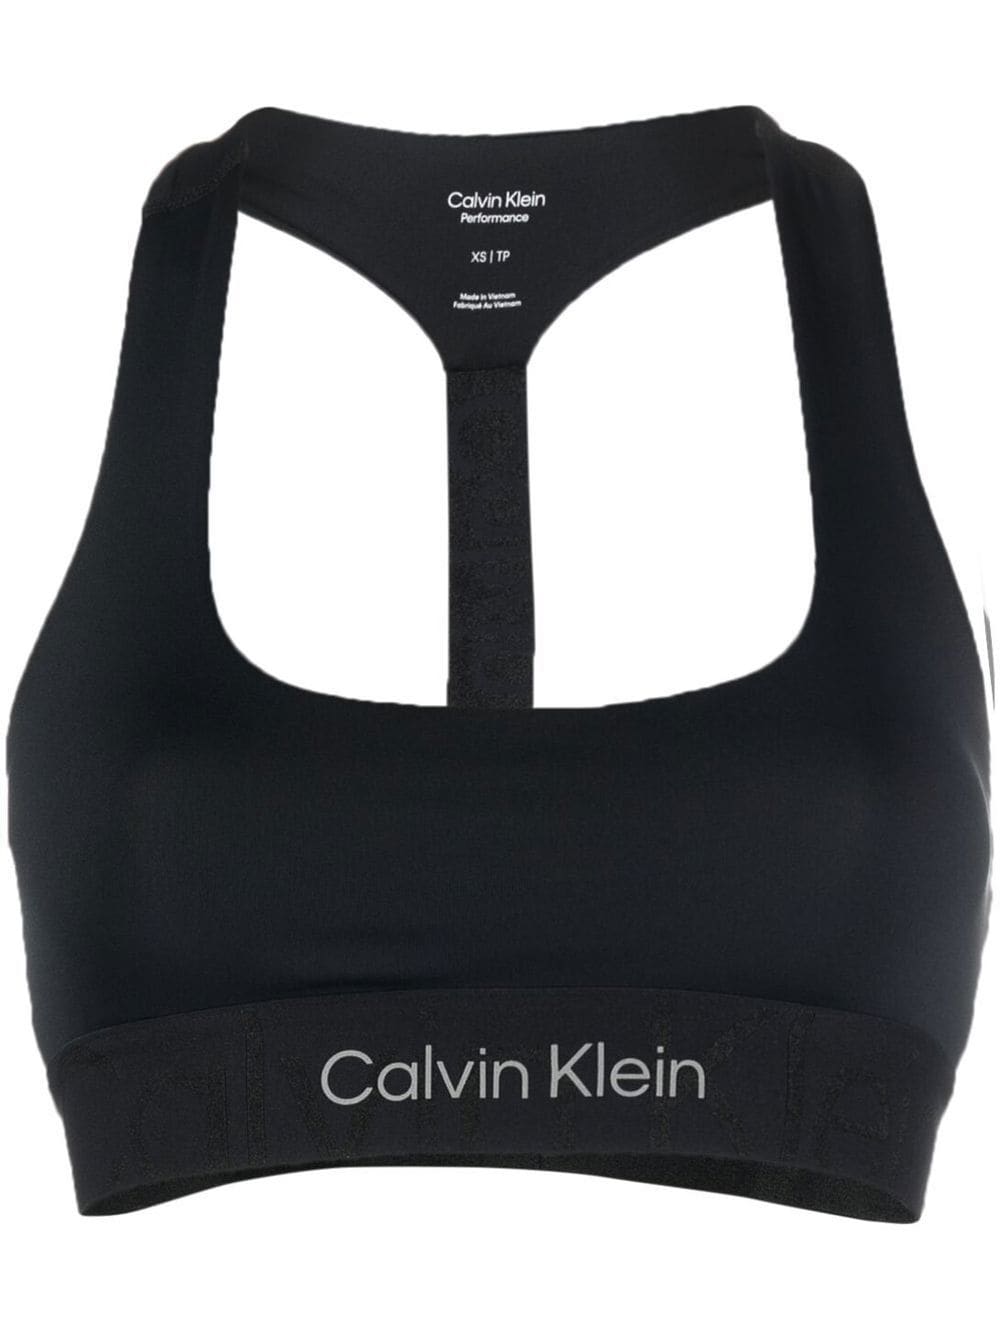 CALVIN KLEIN PERFORMANCE, Grey Women's Crop Top